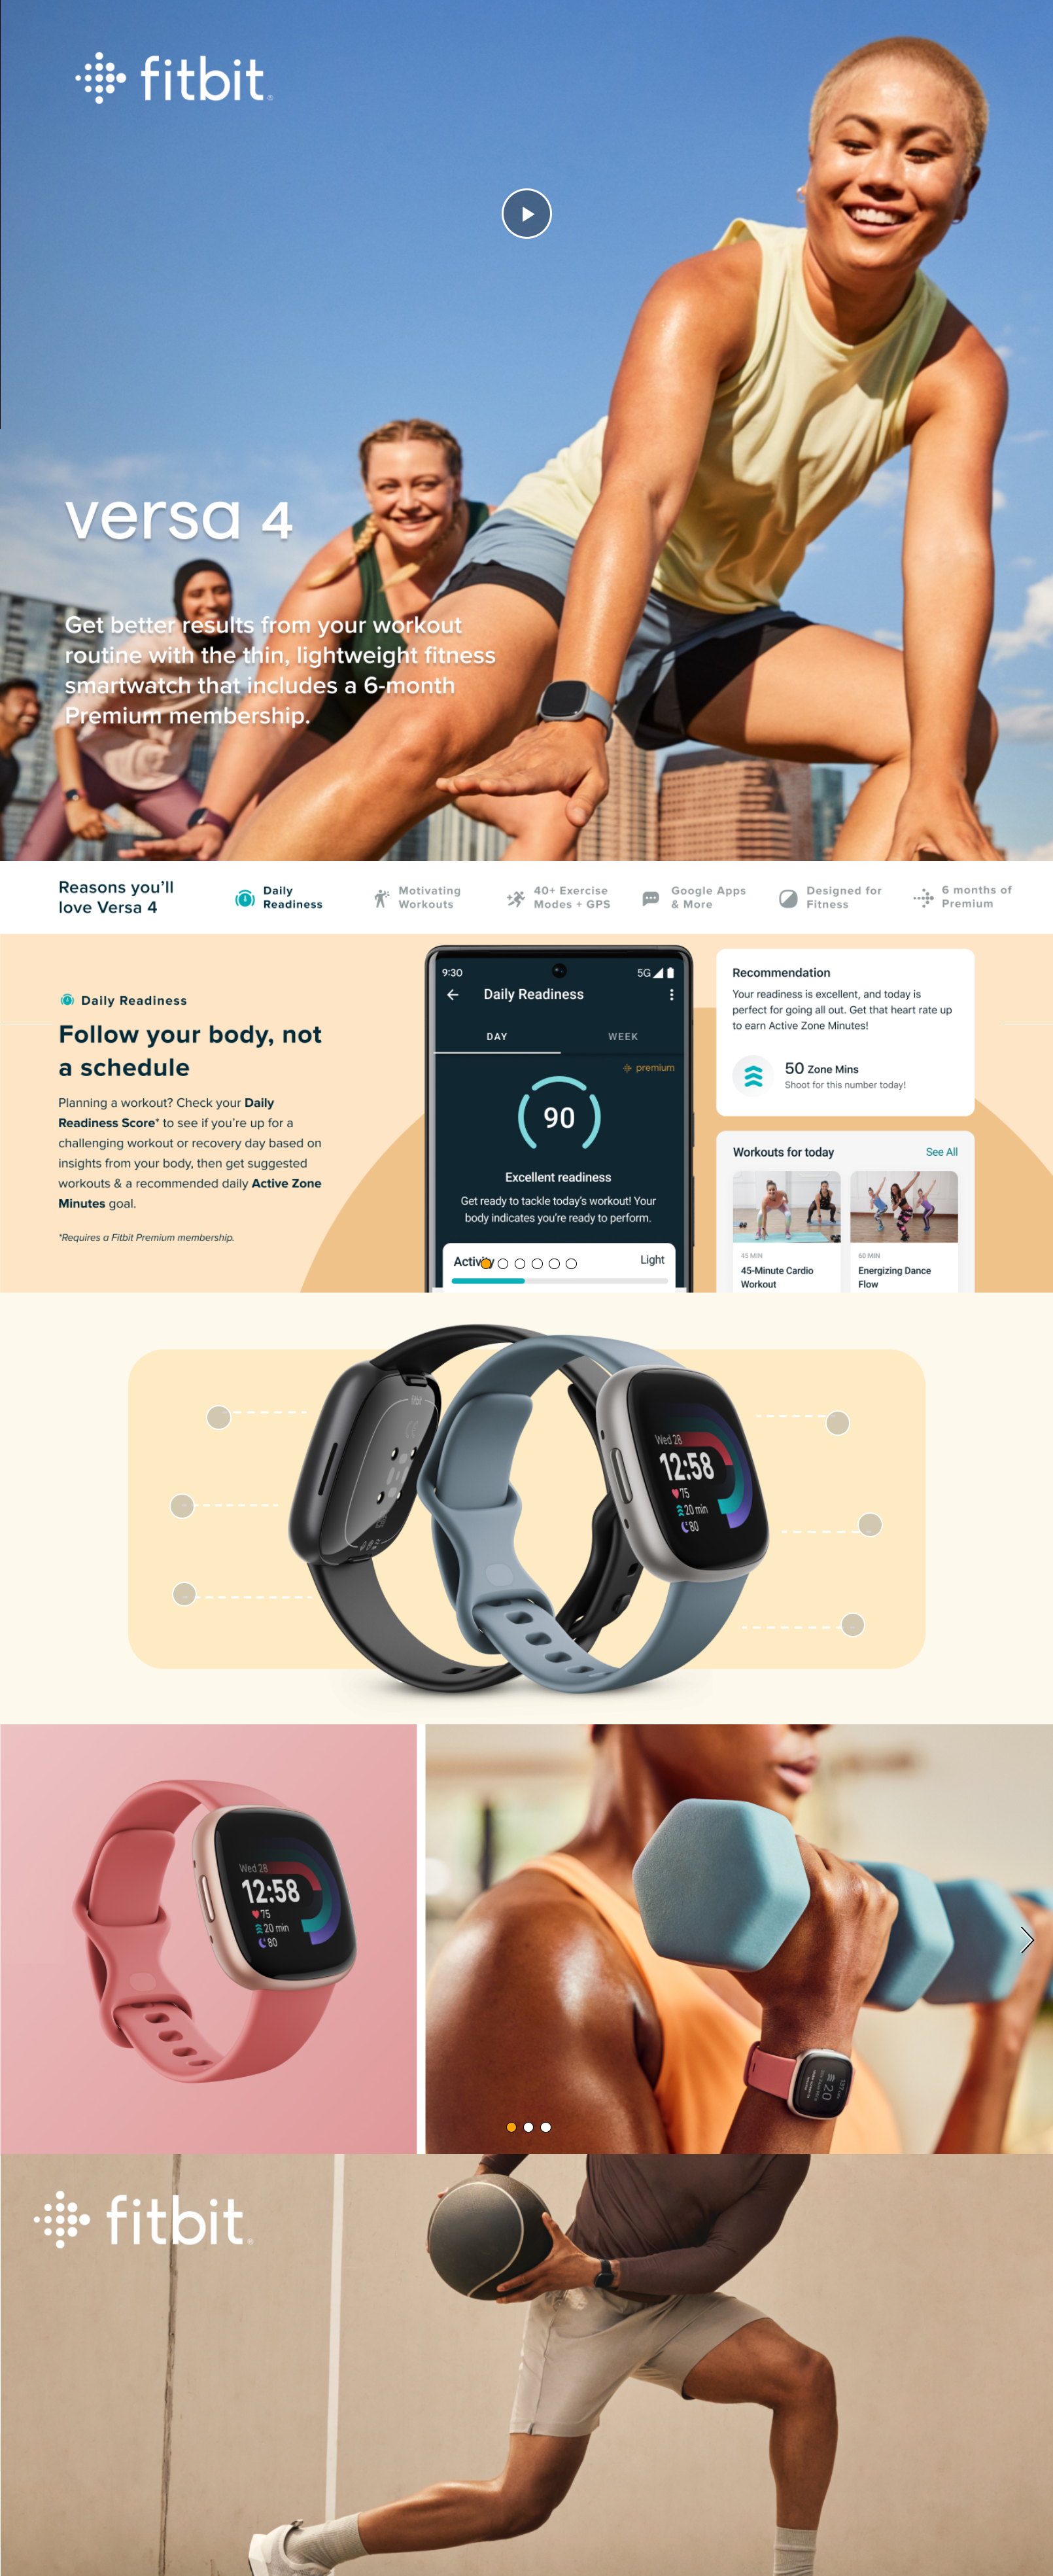 Fitbit Versa 4 Fitness Smartwatch - Black